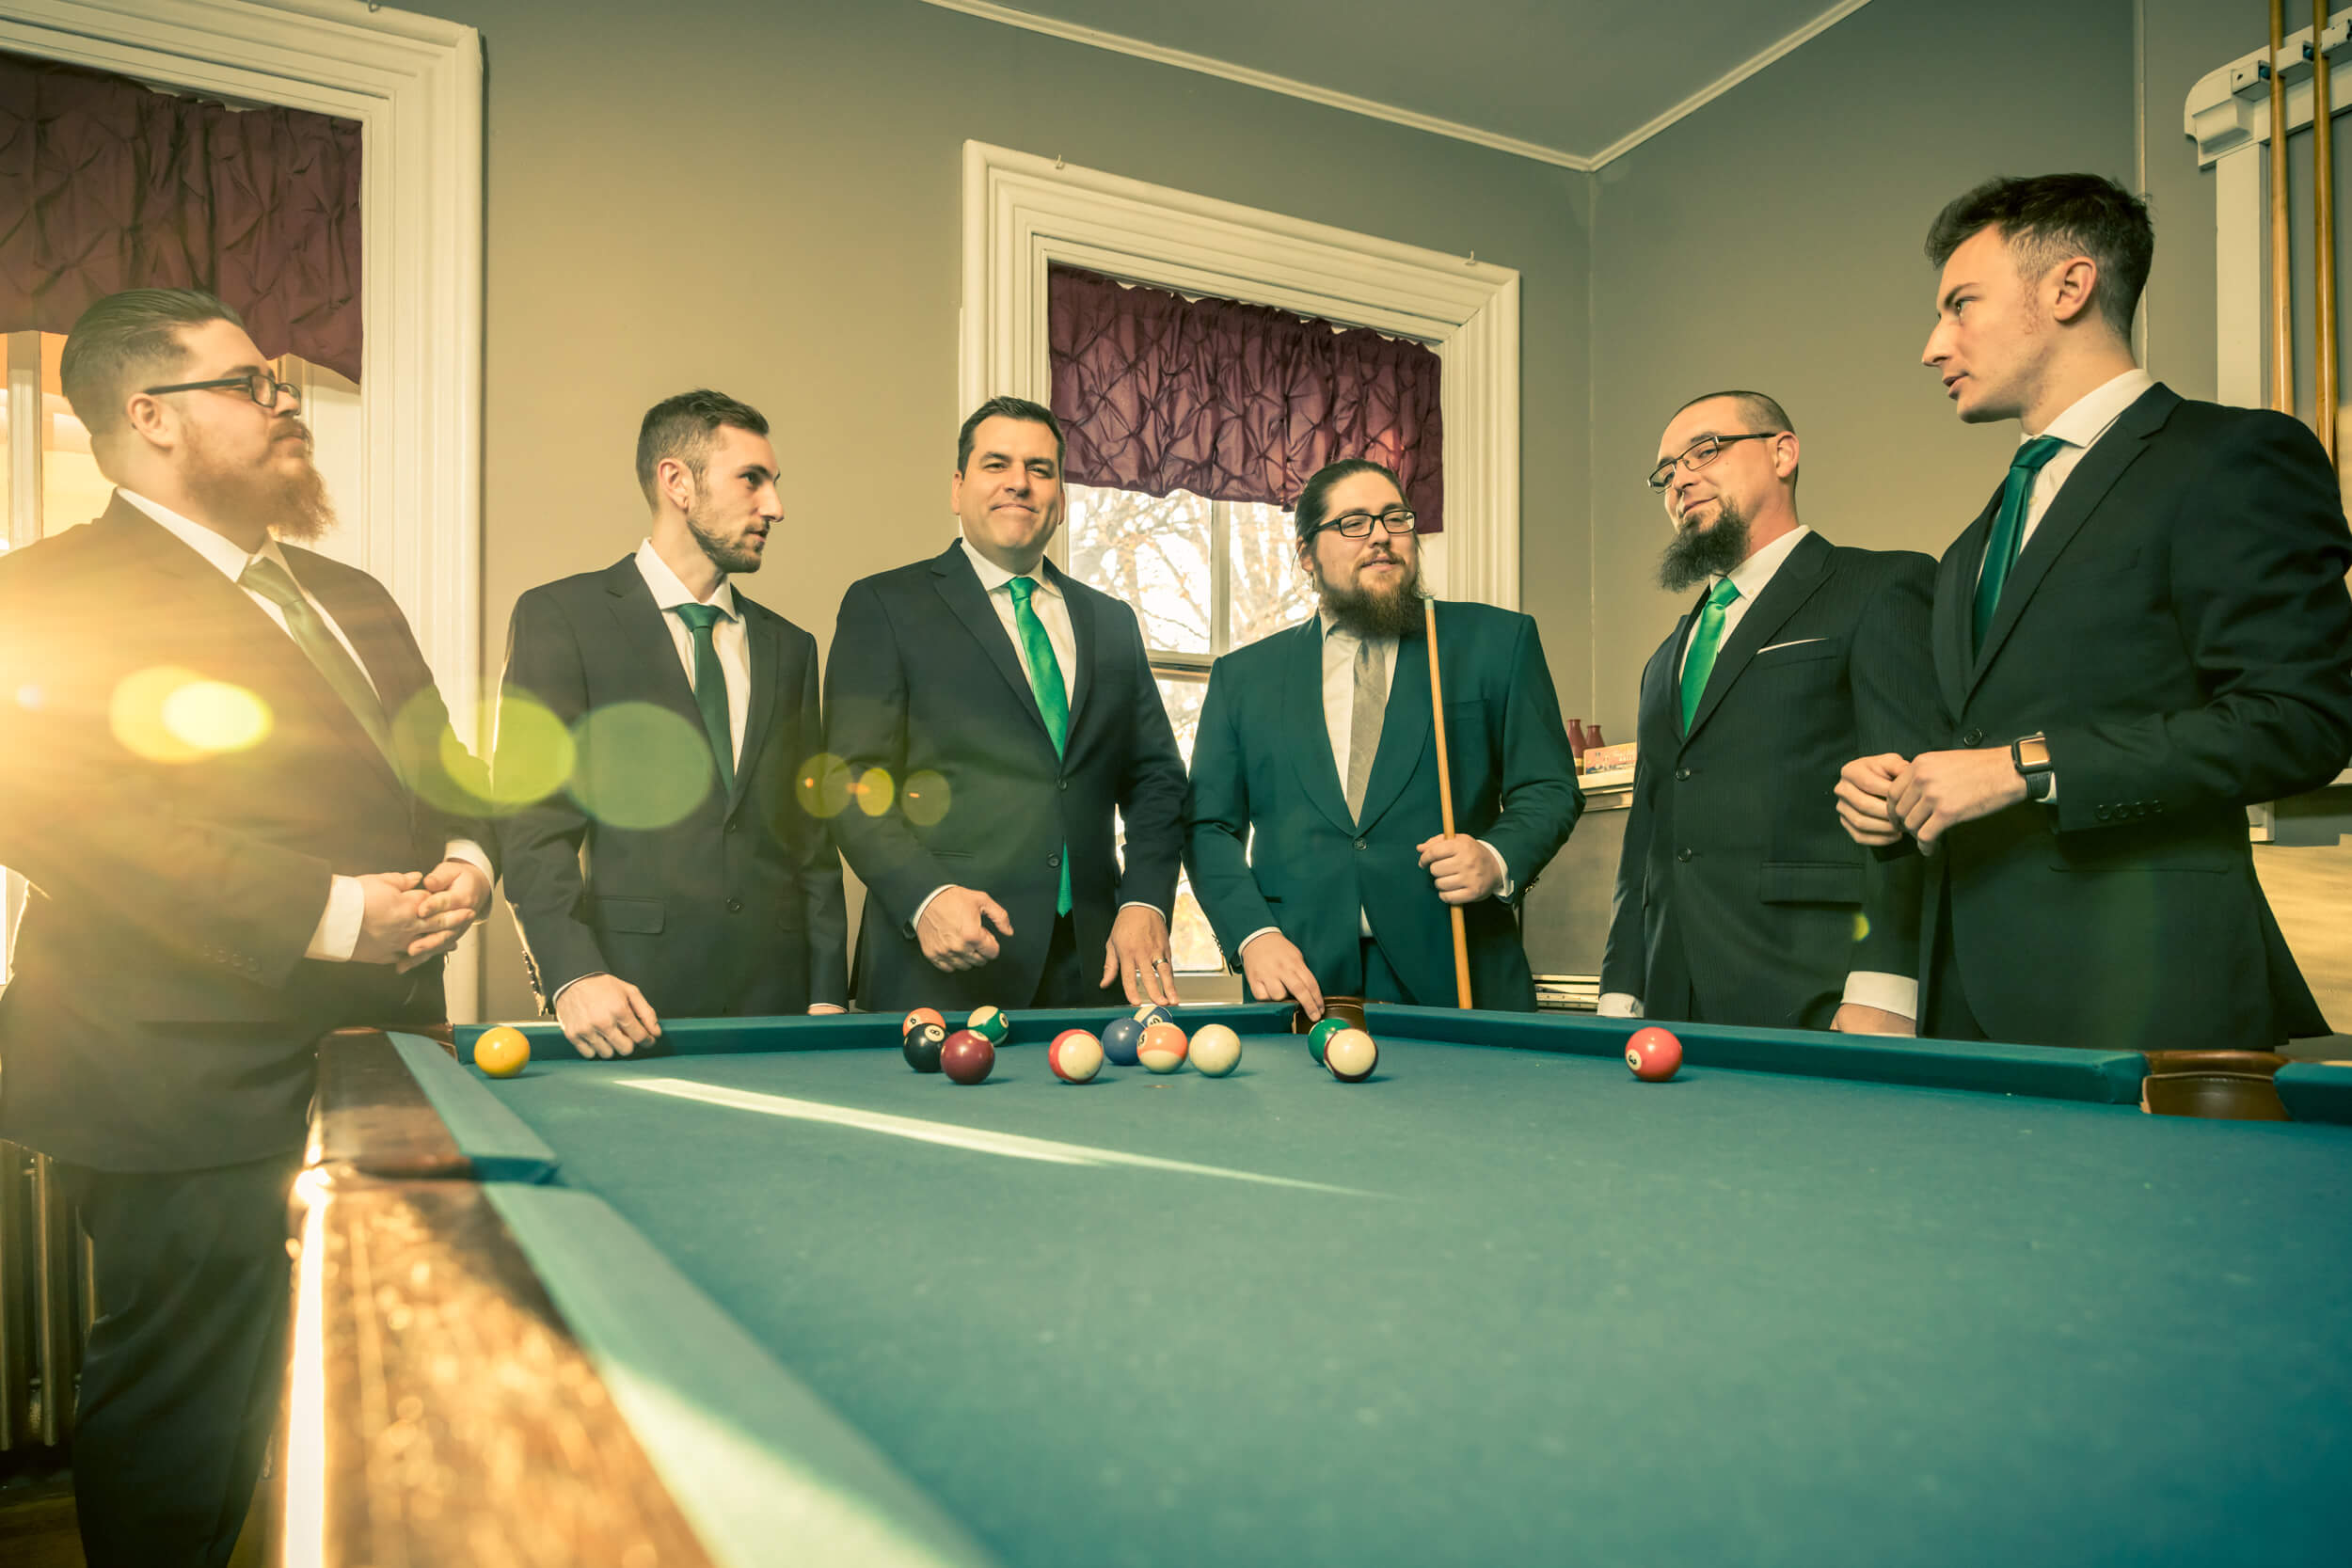 groomsmen in suits at pool table